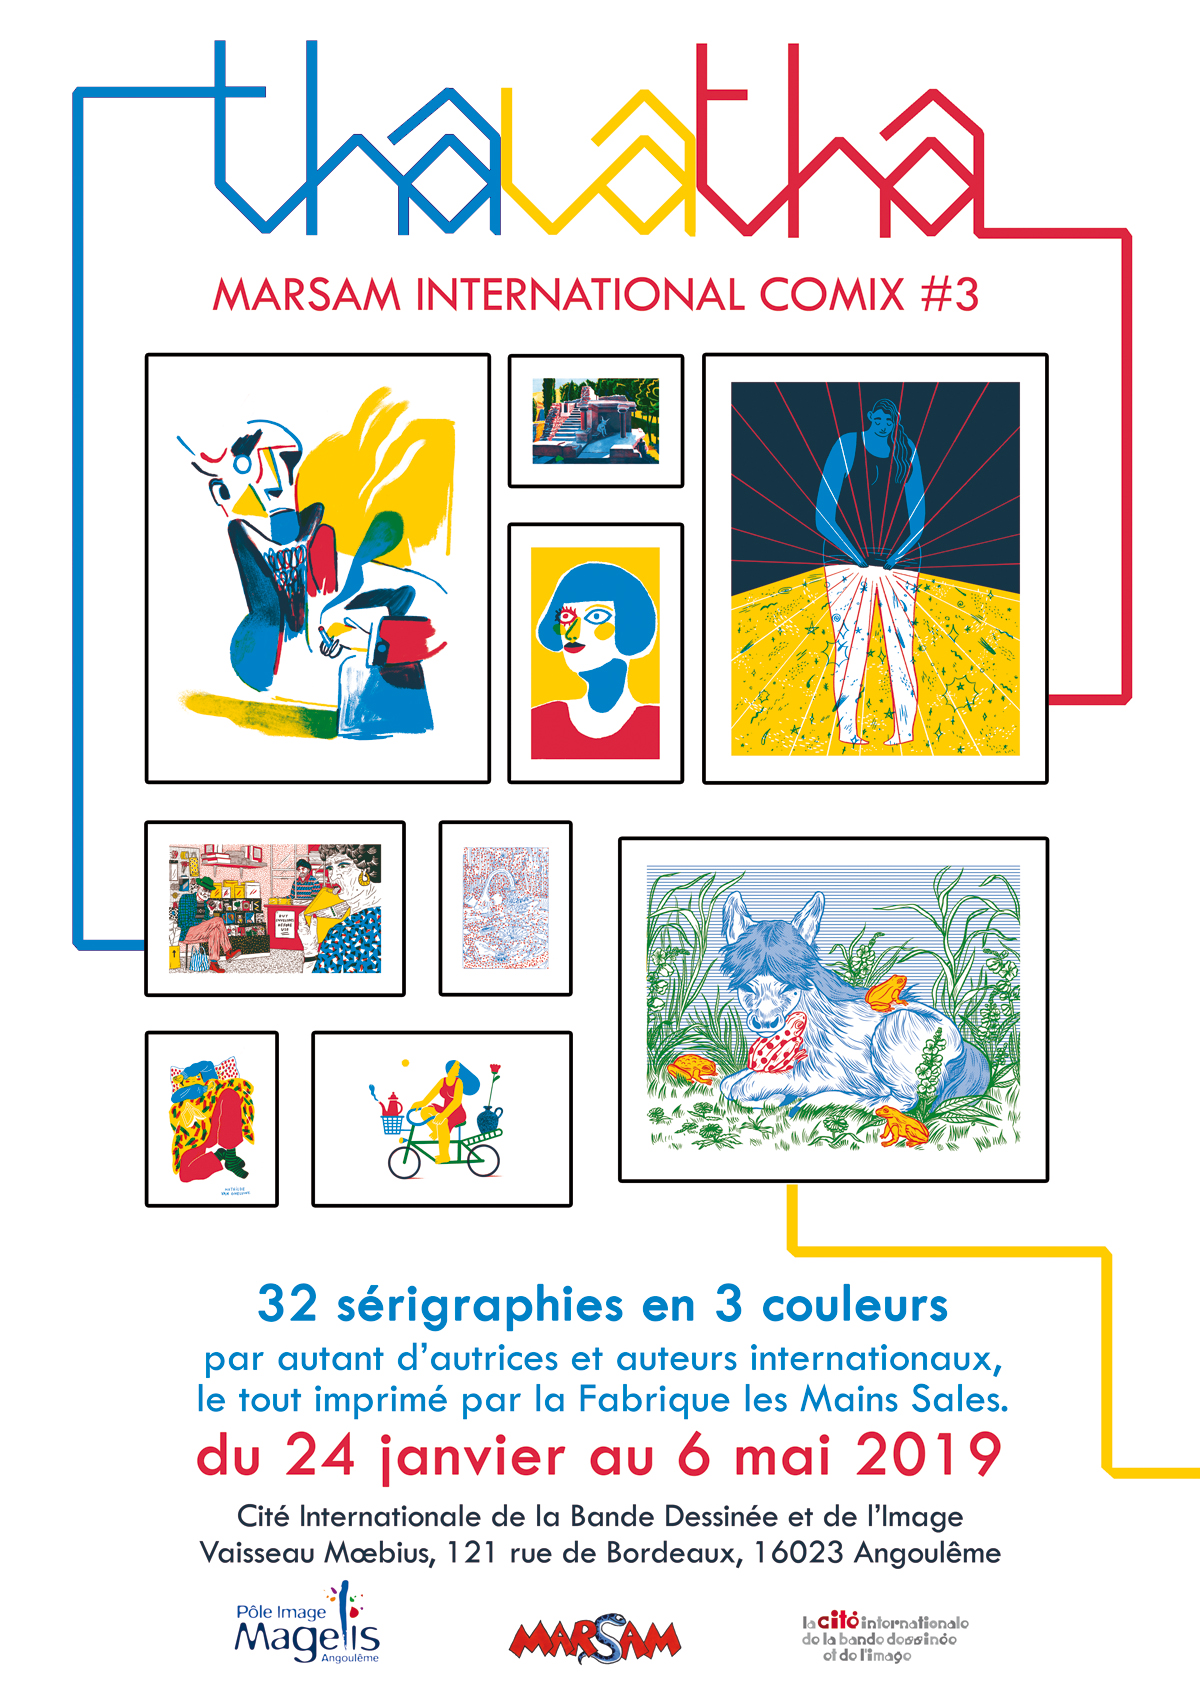 Angoulême 2019 : "Thalatha", une exposition du collectif Marsam